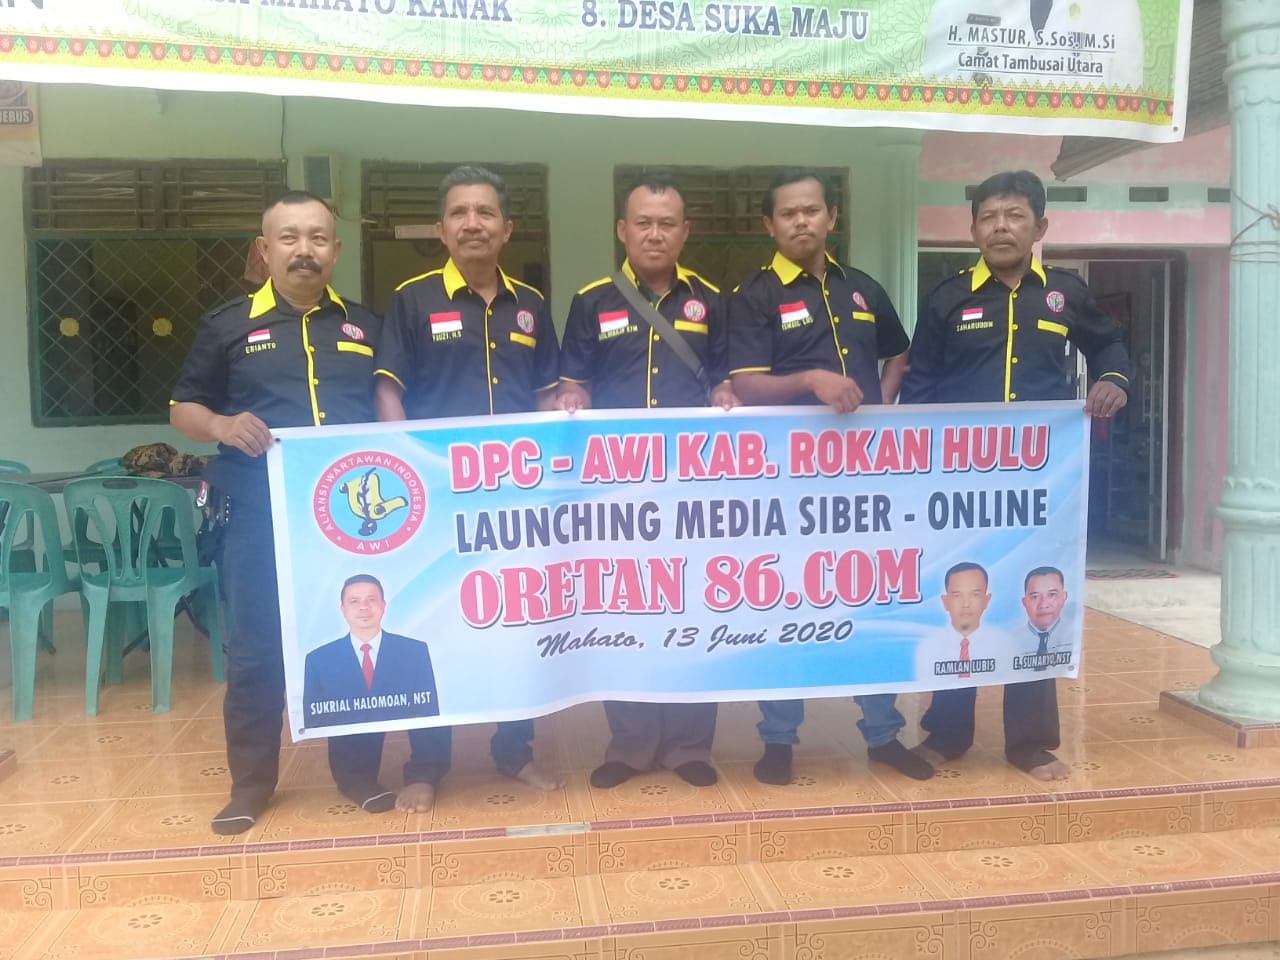 Media Siber Online Oretan86. com, Launching Ke Mahato